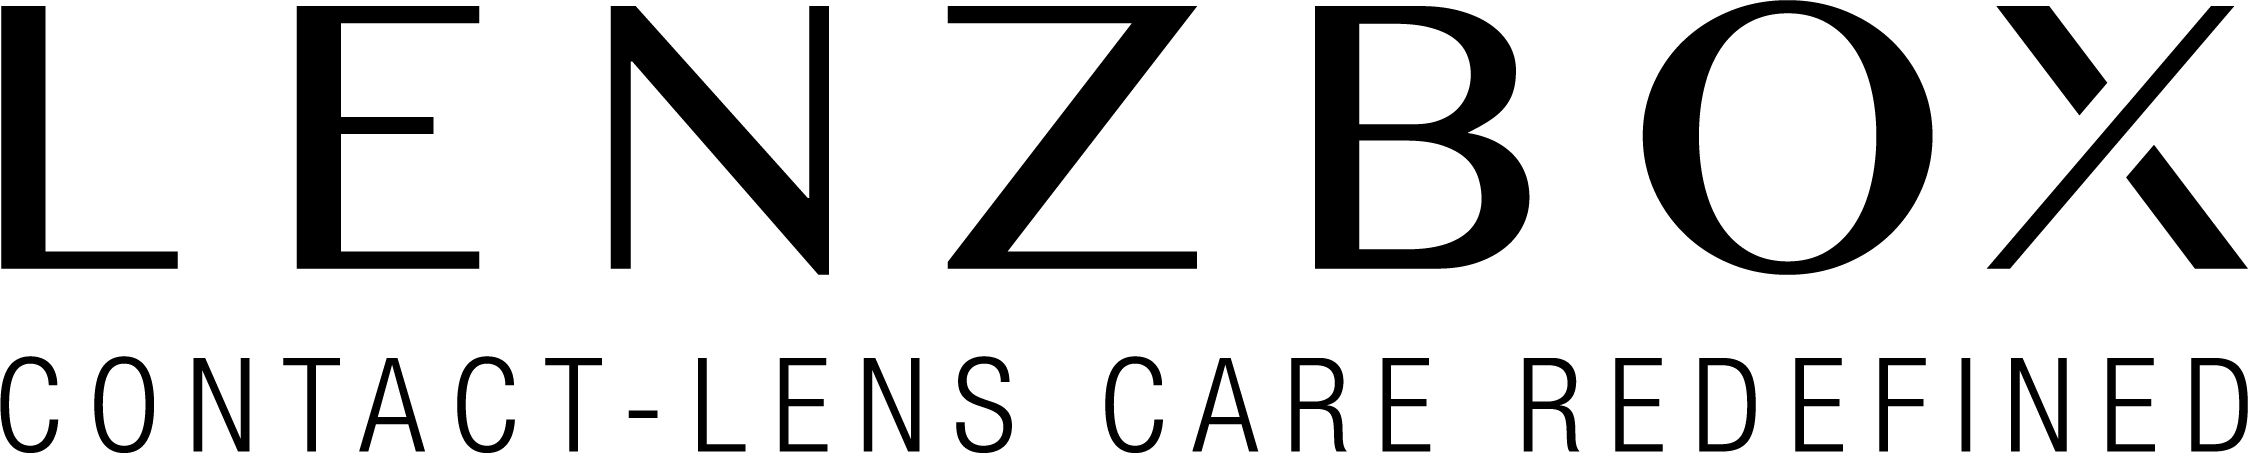 lenzbox_logo